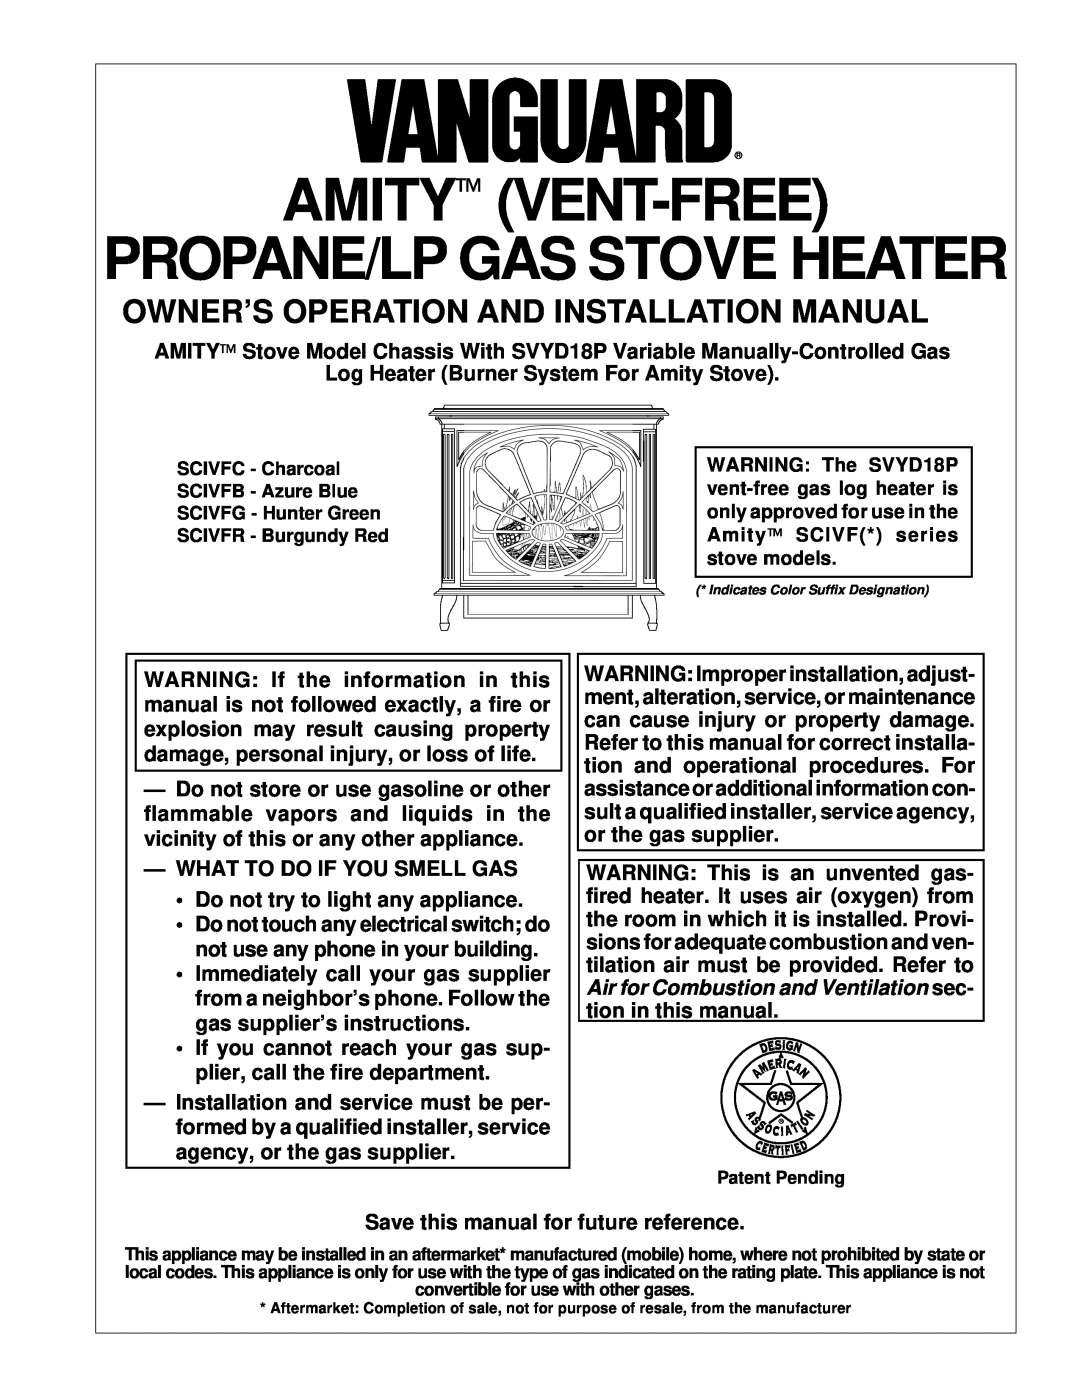 Desa SCIVFR installation manual Owner’S Operation And Installation Manual, Amity Vent-Free, Propane/Lp Gas Stove Heater 